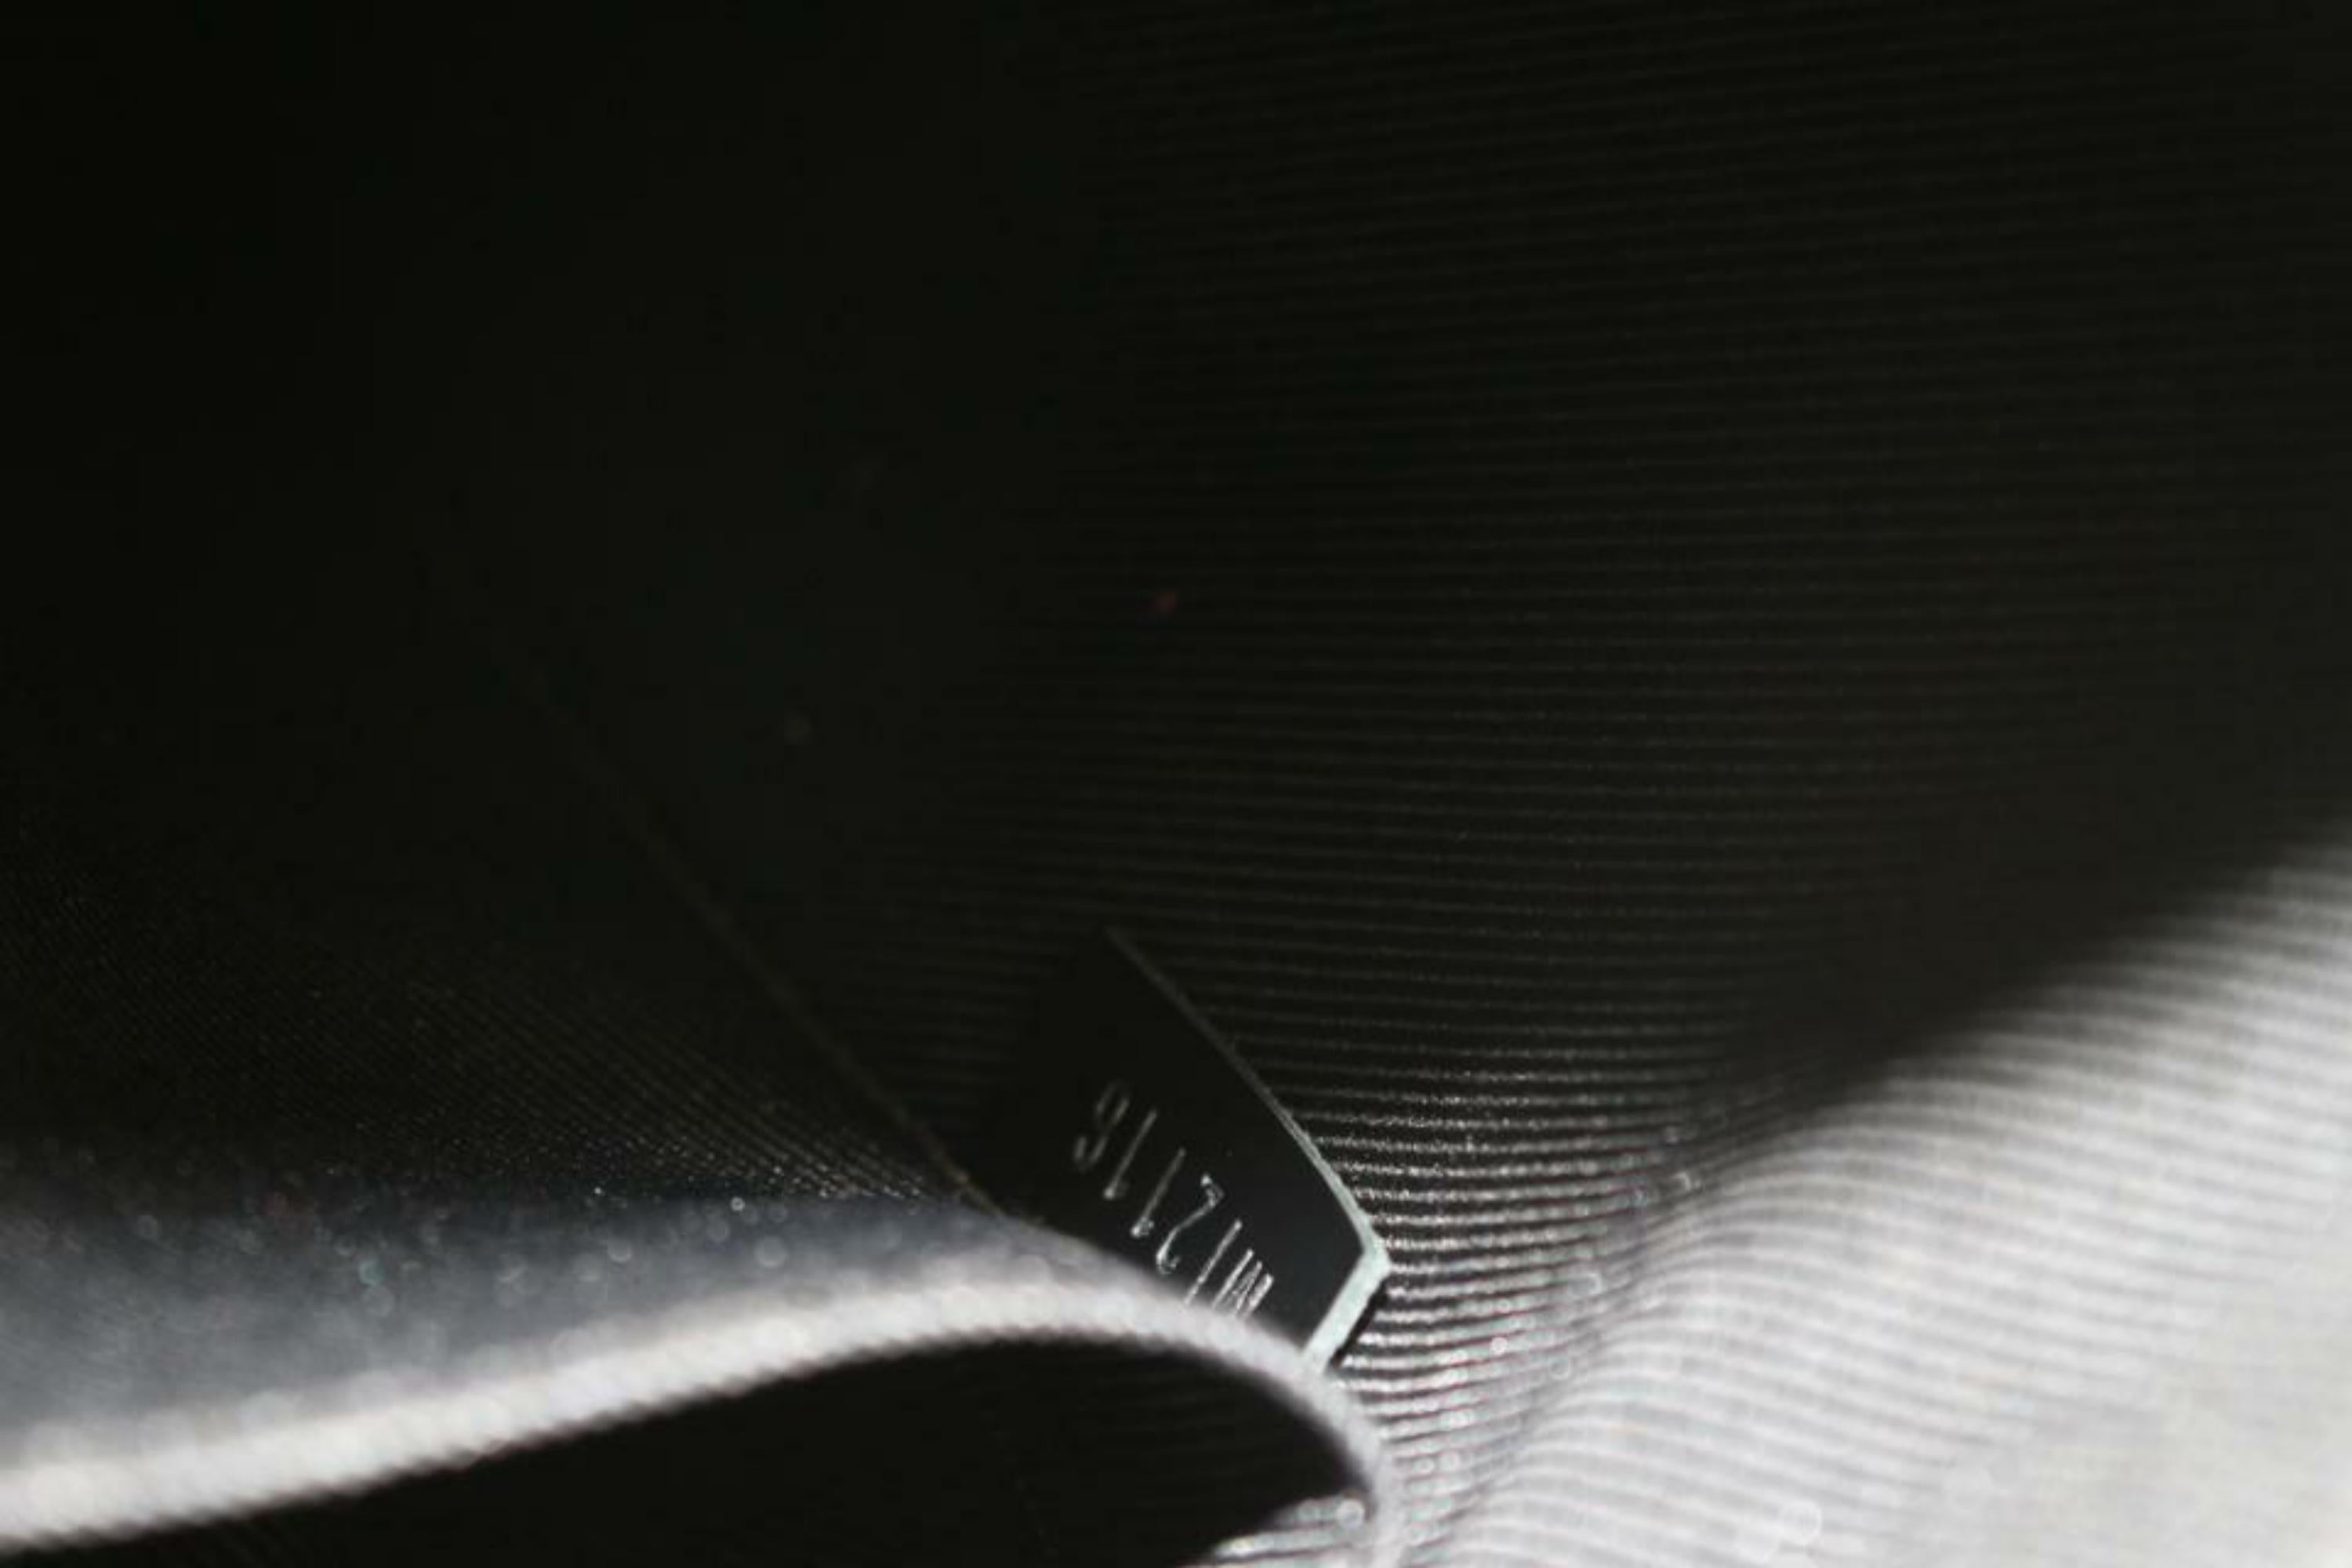 Louis Vuitton Monogram Stripe Pochette Plate MM Zip Pouch Leather